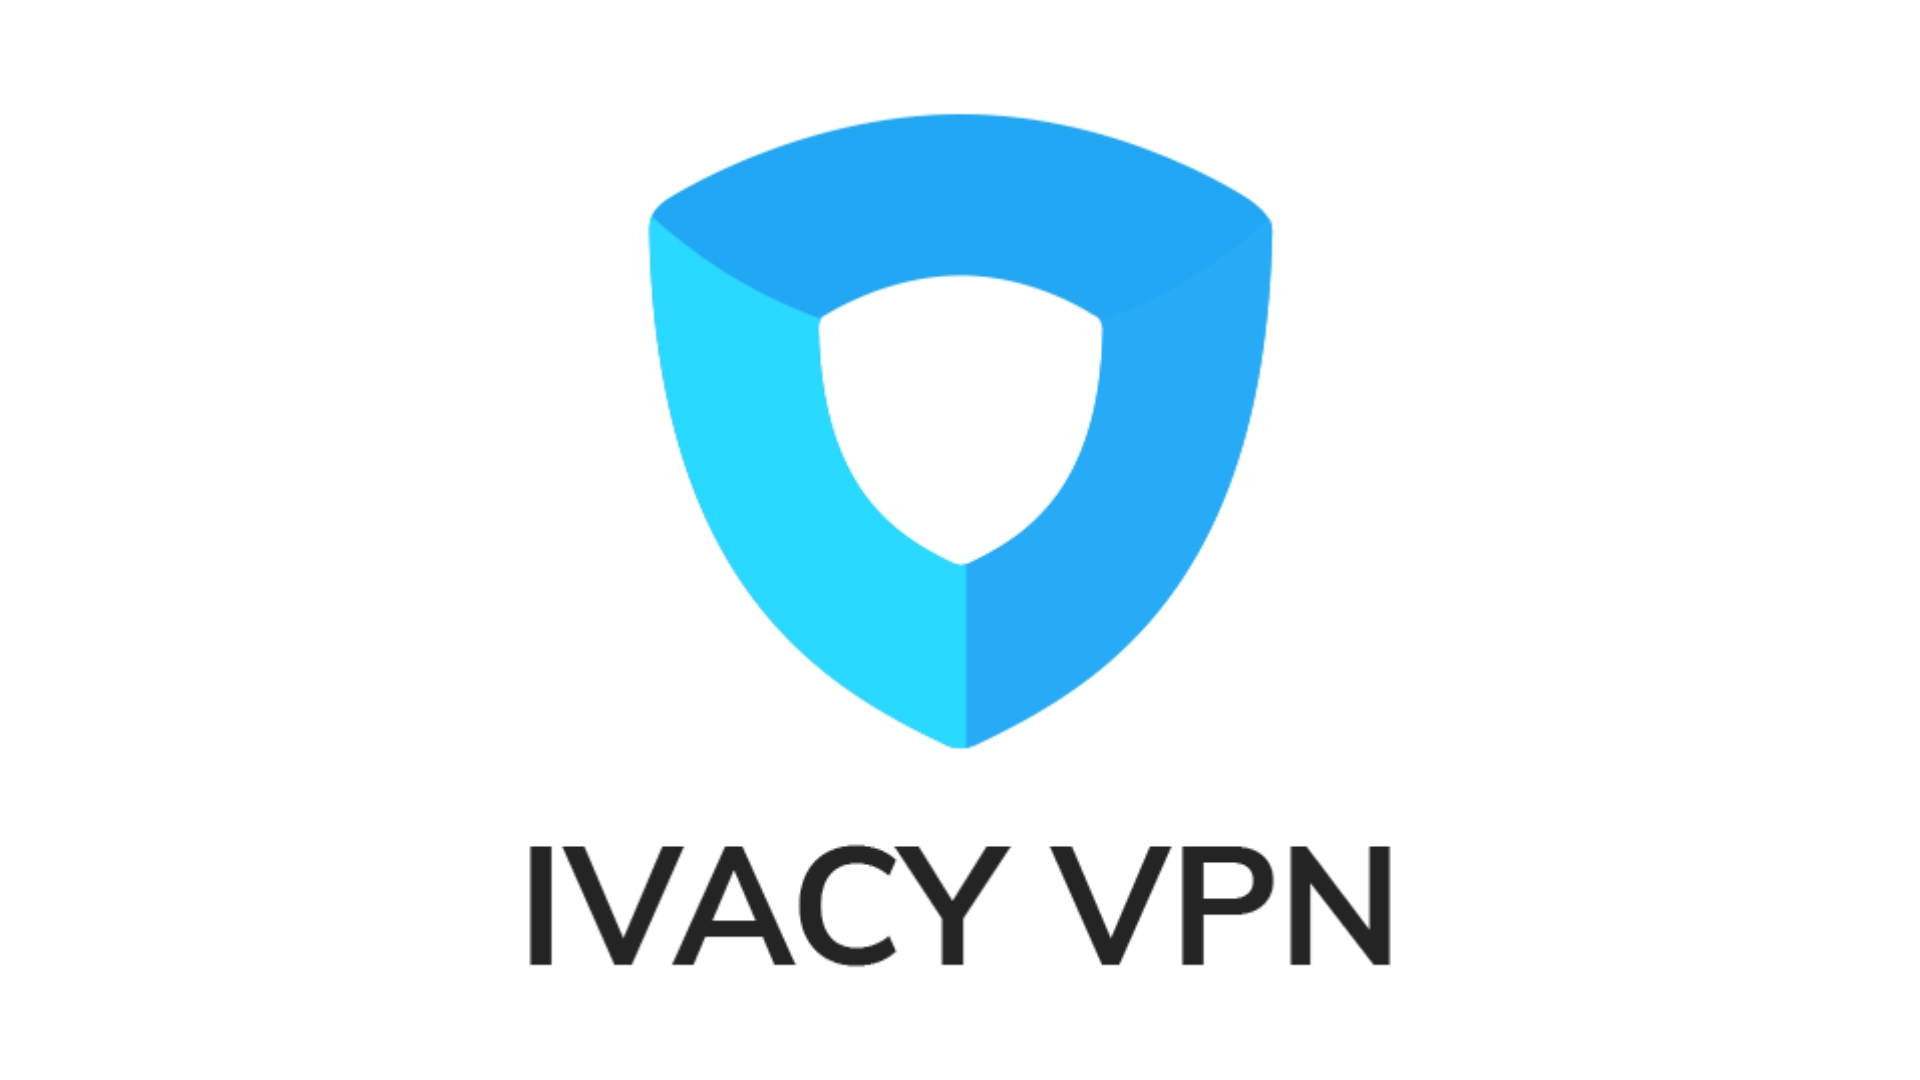 Best Windows 10 VPN - Ivacy VPN. Image shows its logo on a white background.